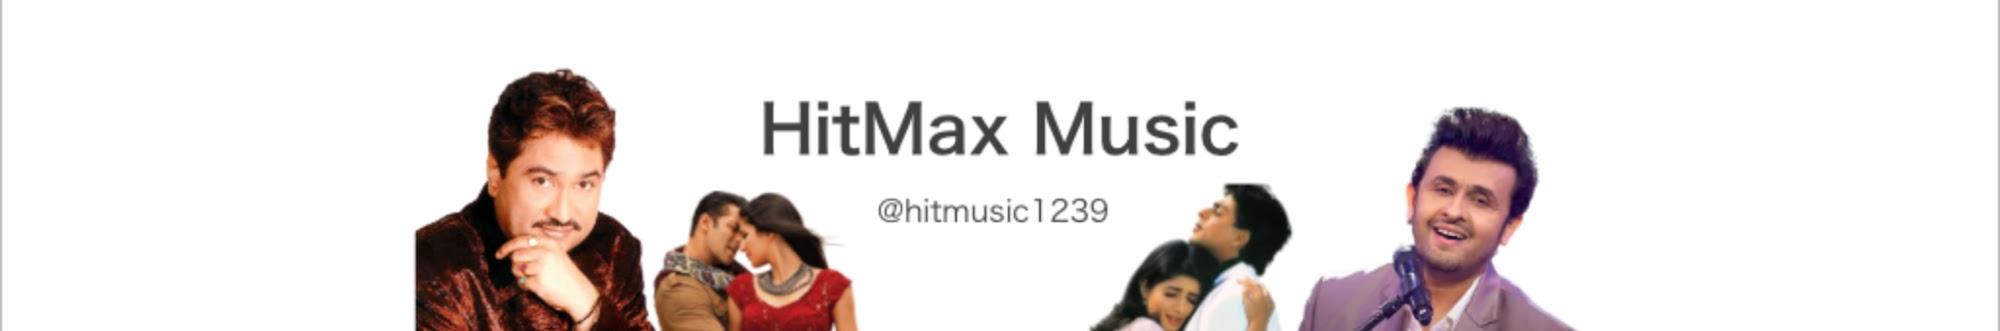 HitMax Music Company